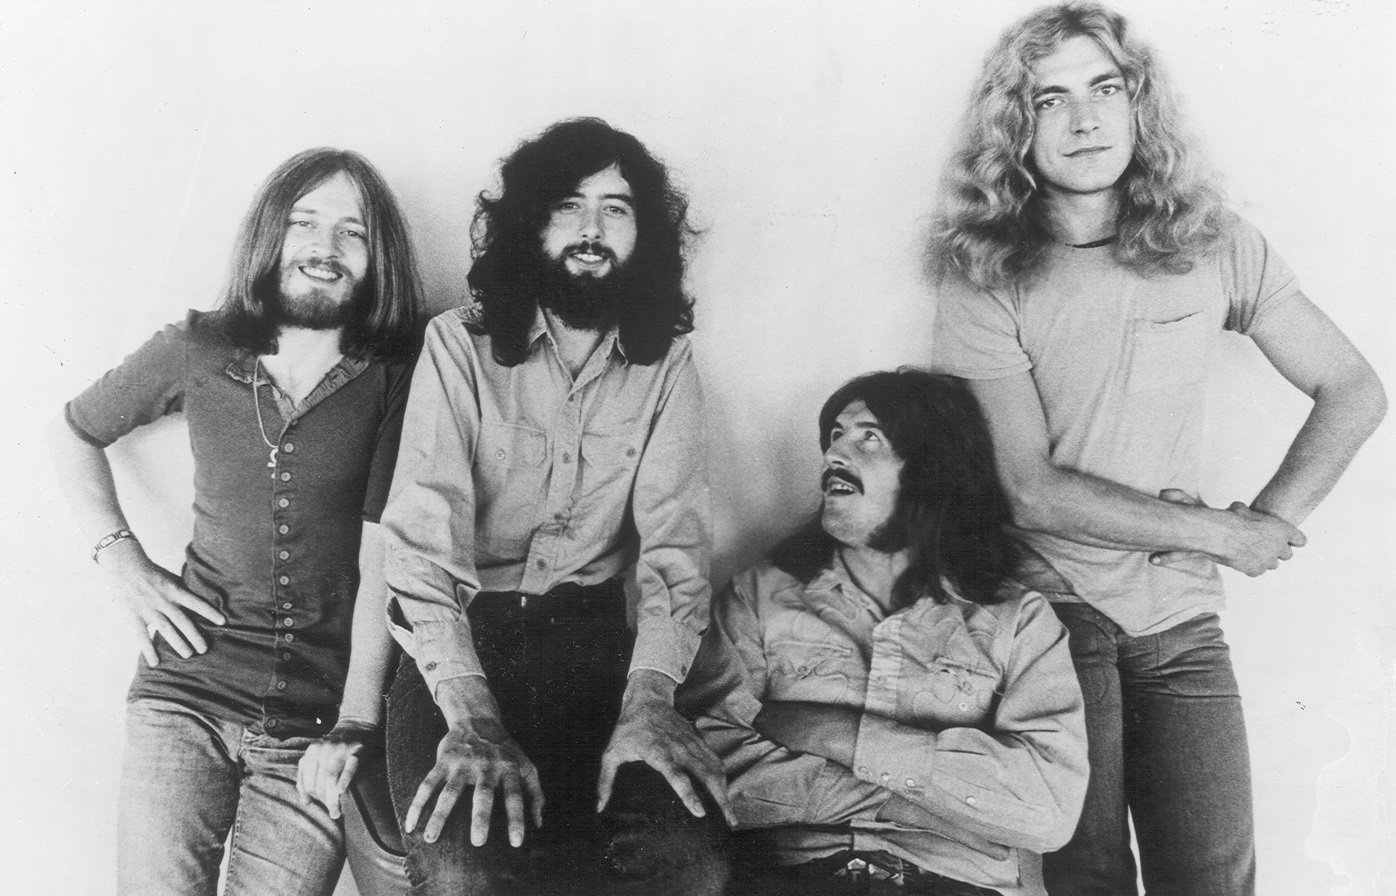 Led Zeppelin portrait, 1970